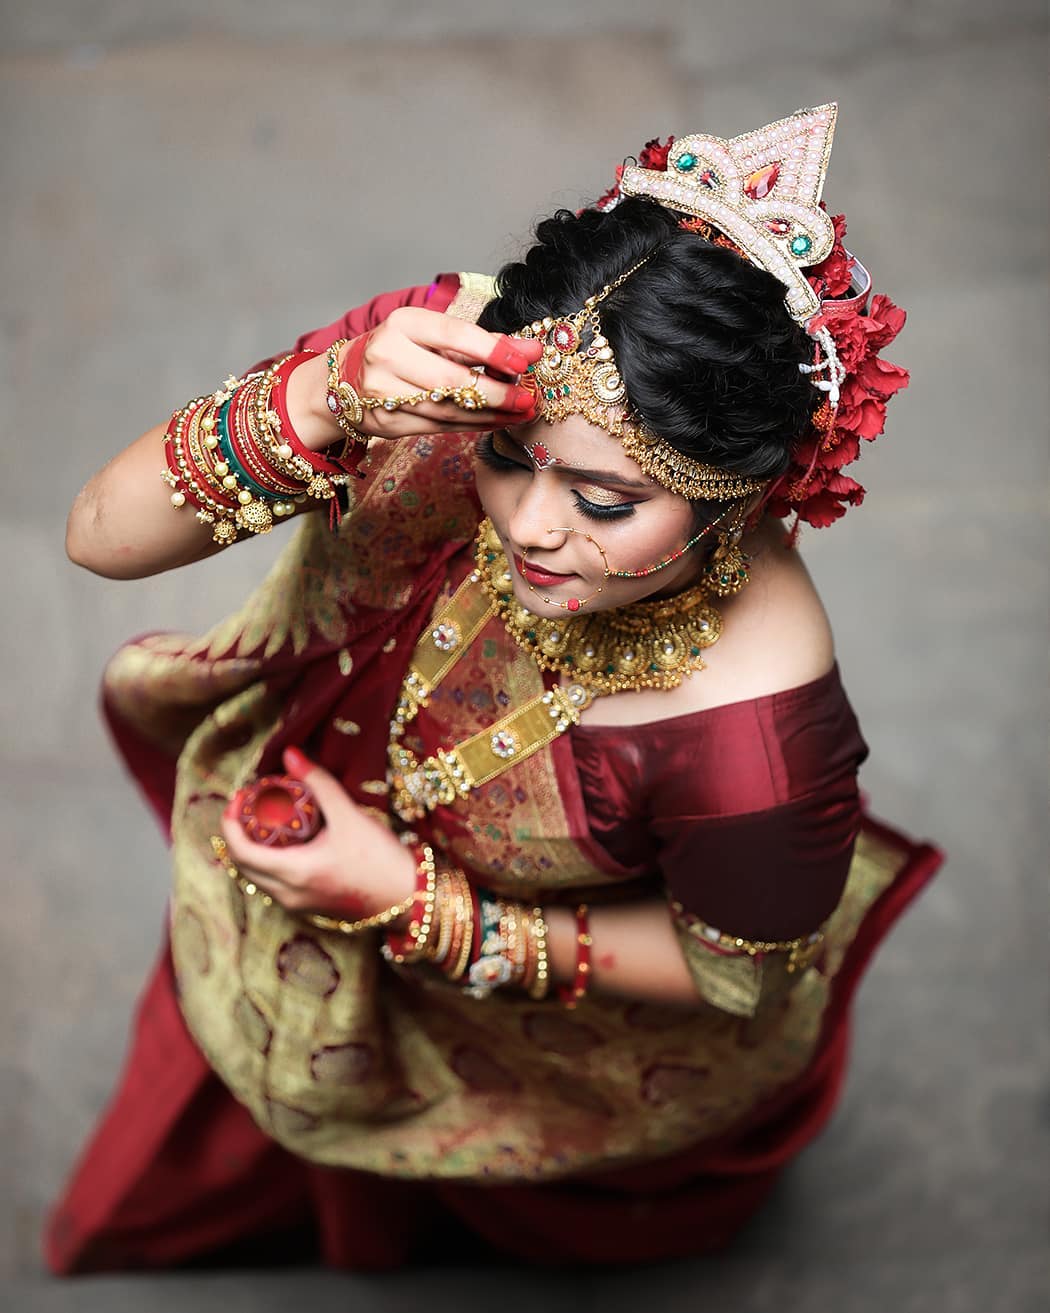 Bengali bride shoot.. MUA : @dishabeautysaloonacademynikol
In frame : Meera
Shoot by : @dip_memento_photography
.
.
#portraits #dslrofficial #indianphotographers 
#portraitsindia #canon #colorsofindia
#photosofindia 
#fashion
#photographersofindia
#portraitsindia #fashionblogger #dipmementophotography
#makeupartist #photography #portraitvision #portraitmood #indianportraits #colorsofindia #portraitphotography #ahmedabad #indianpictures 
#portraitmood #portraits_india #bokehphotography #bongportrait #bokehphotography #yesindia 
@ig_calcutta @all_about_kolkata123
@kolkatasutra
@kolkataportraits 
@kolkataportraitphotographer
@stories_from_lens 
@kolkatas_paparazzi
@globe_portraits
@ig_biswajit 
@portvisual
@bong_crush_ 
@bong.divas 
@_bong.queen_
@bong_fashion_bloggers
@bong_princess
@bong_angles
@beauty_of_bengal
@bong_bomb
@bongoporichoy
@indian_fashion_bloggers
#bongportrait #bongcrush_official
@bestportraitsindia #9924227745 #dipmementophotography #dip_memento_photography